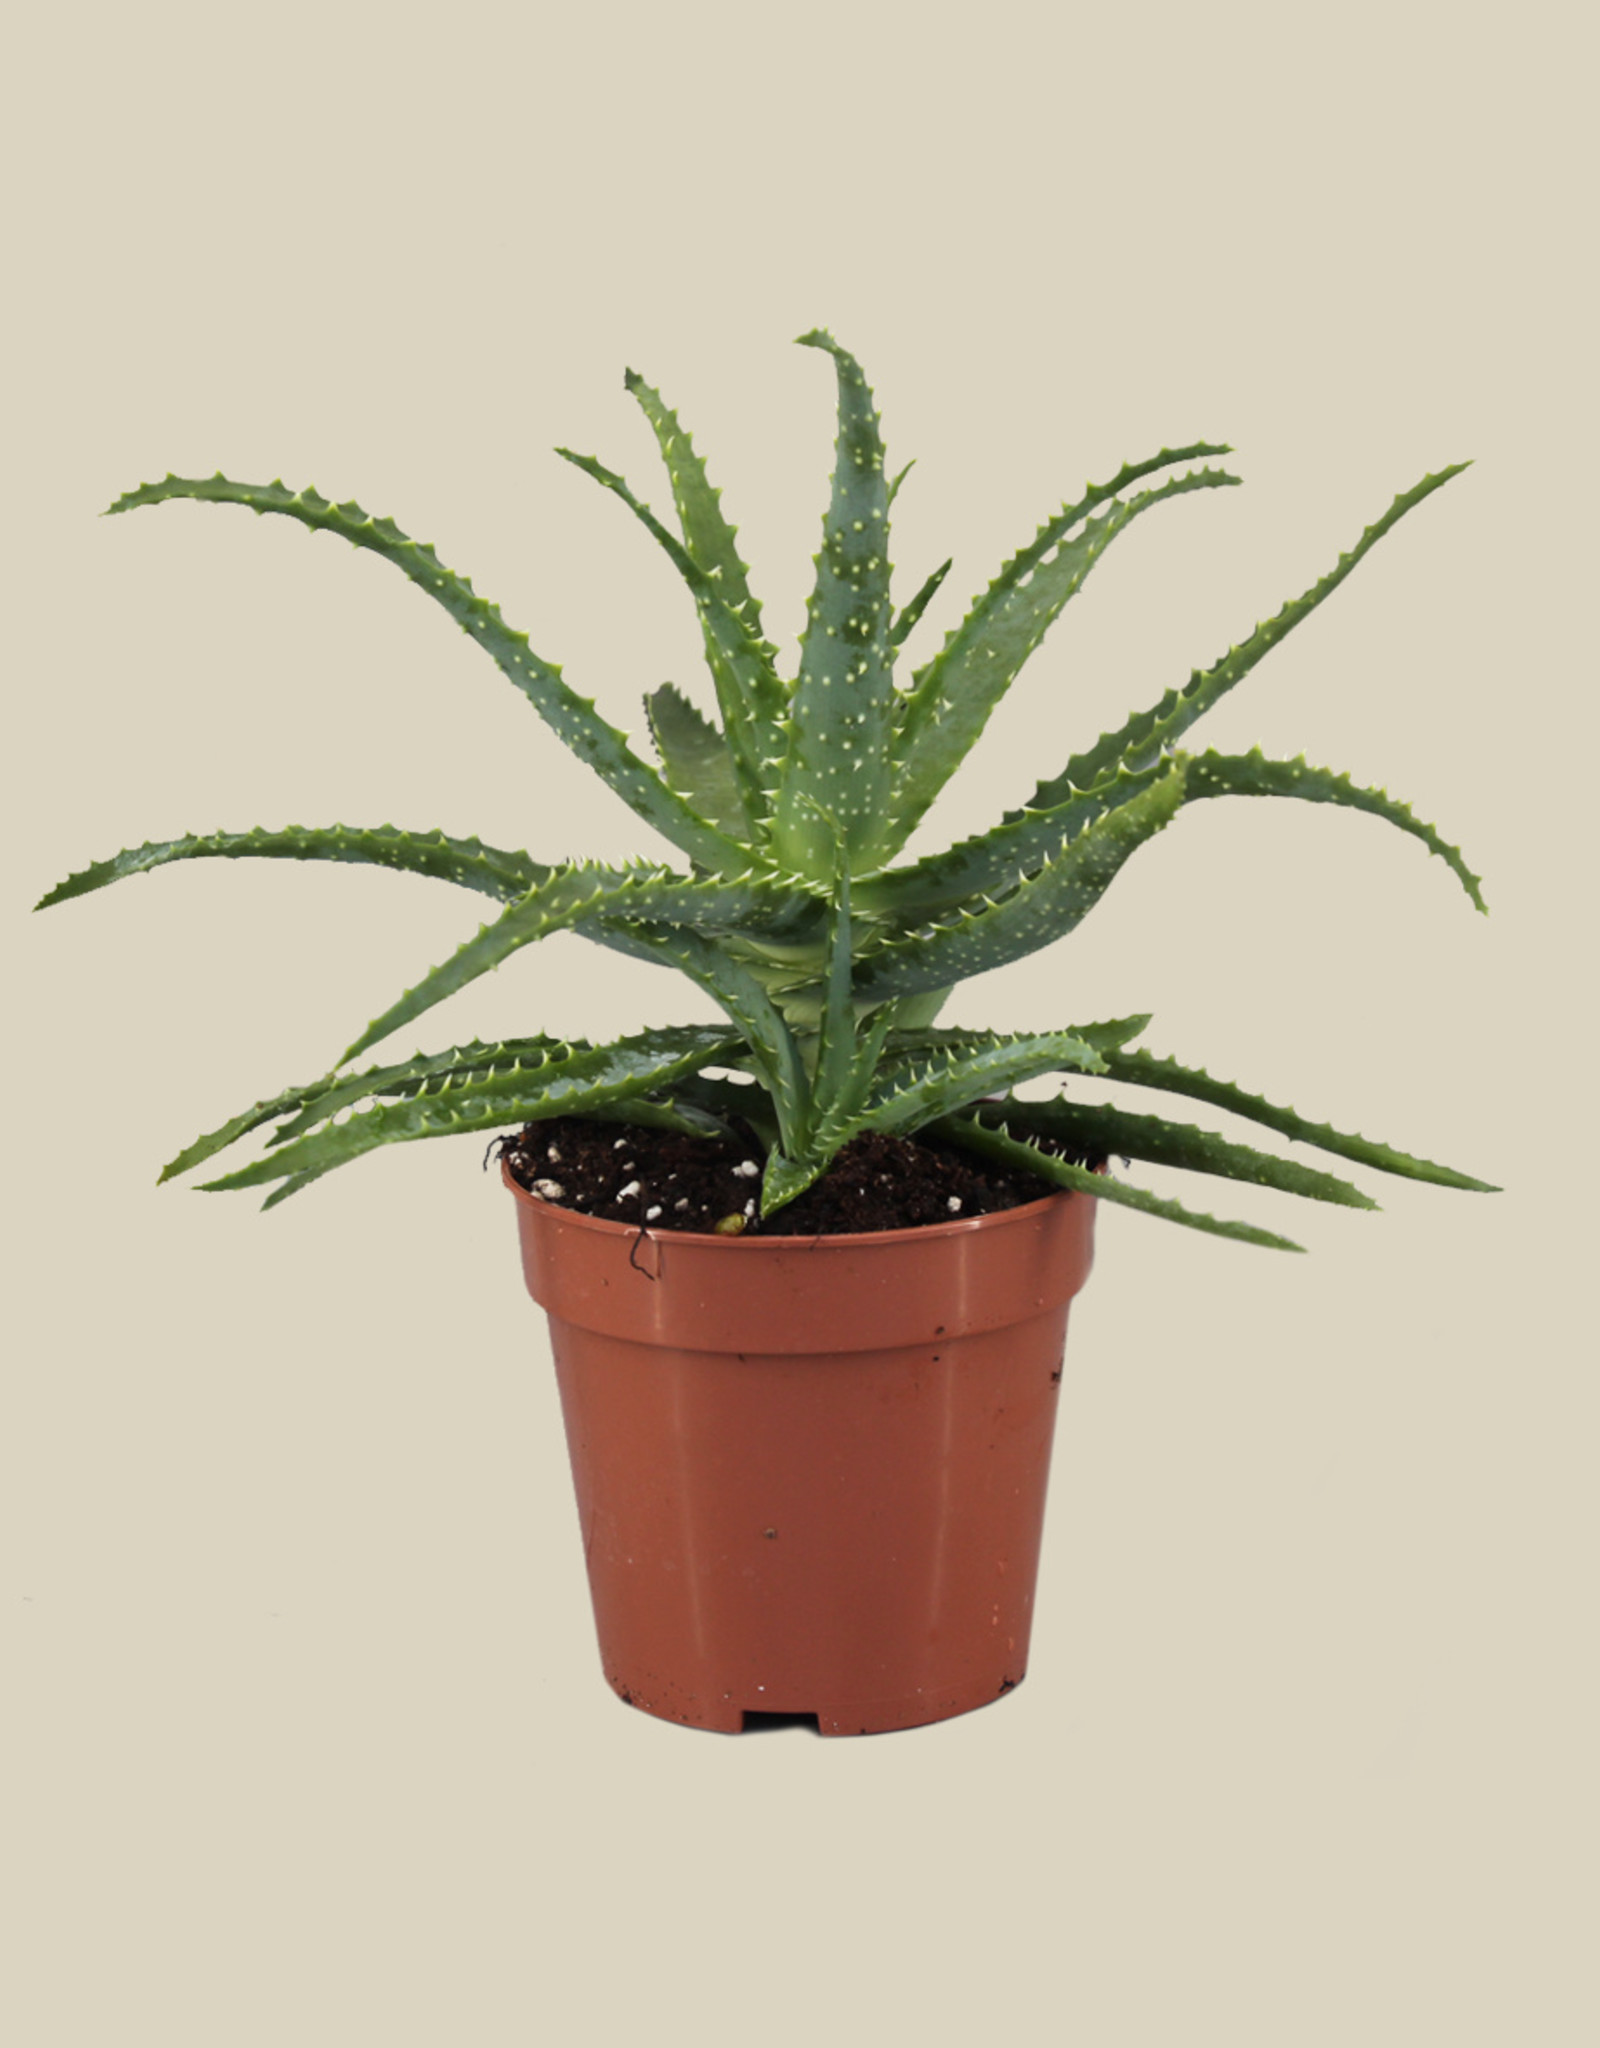 Aloe spinosissima